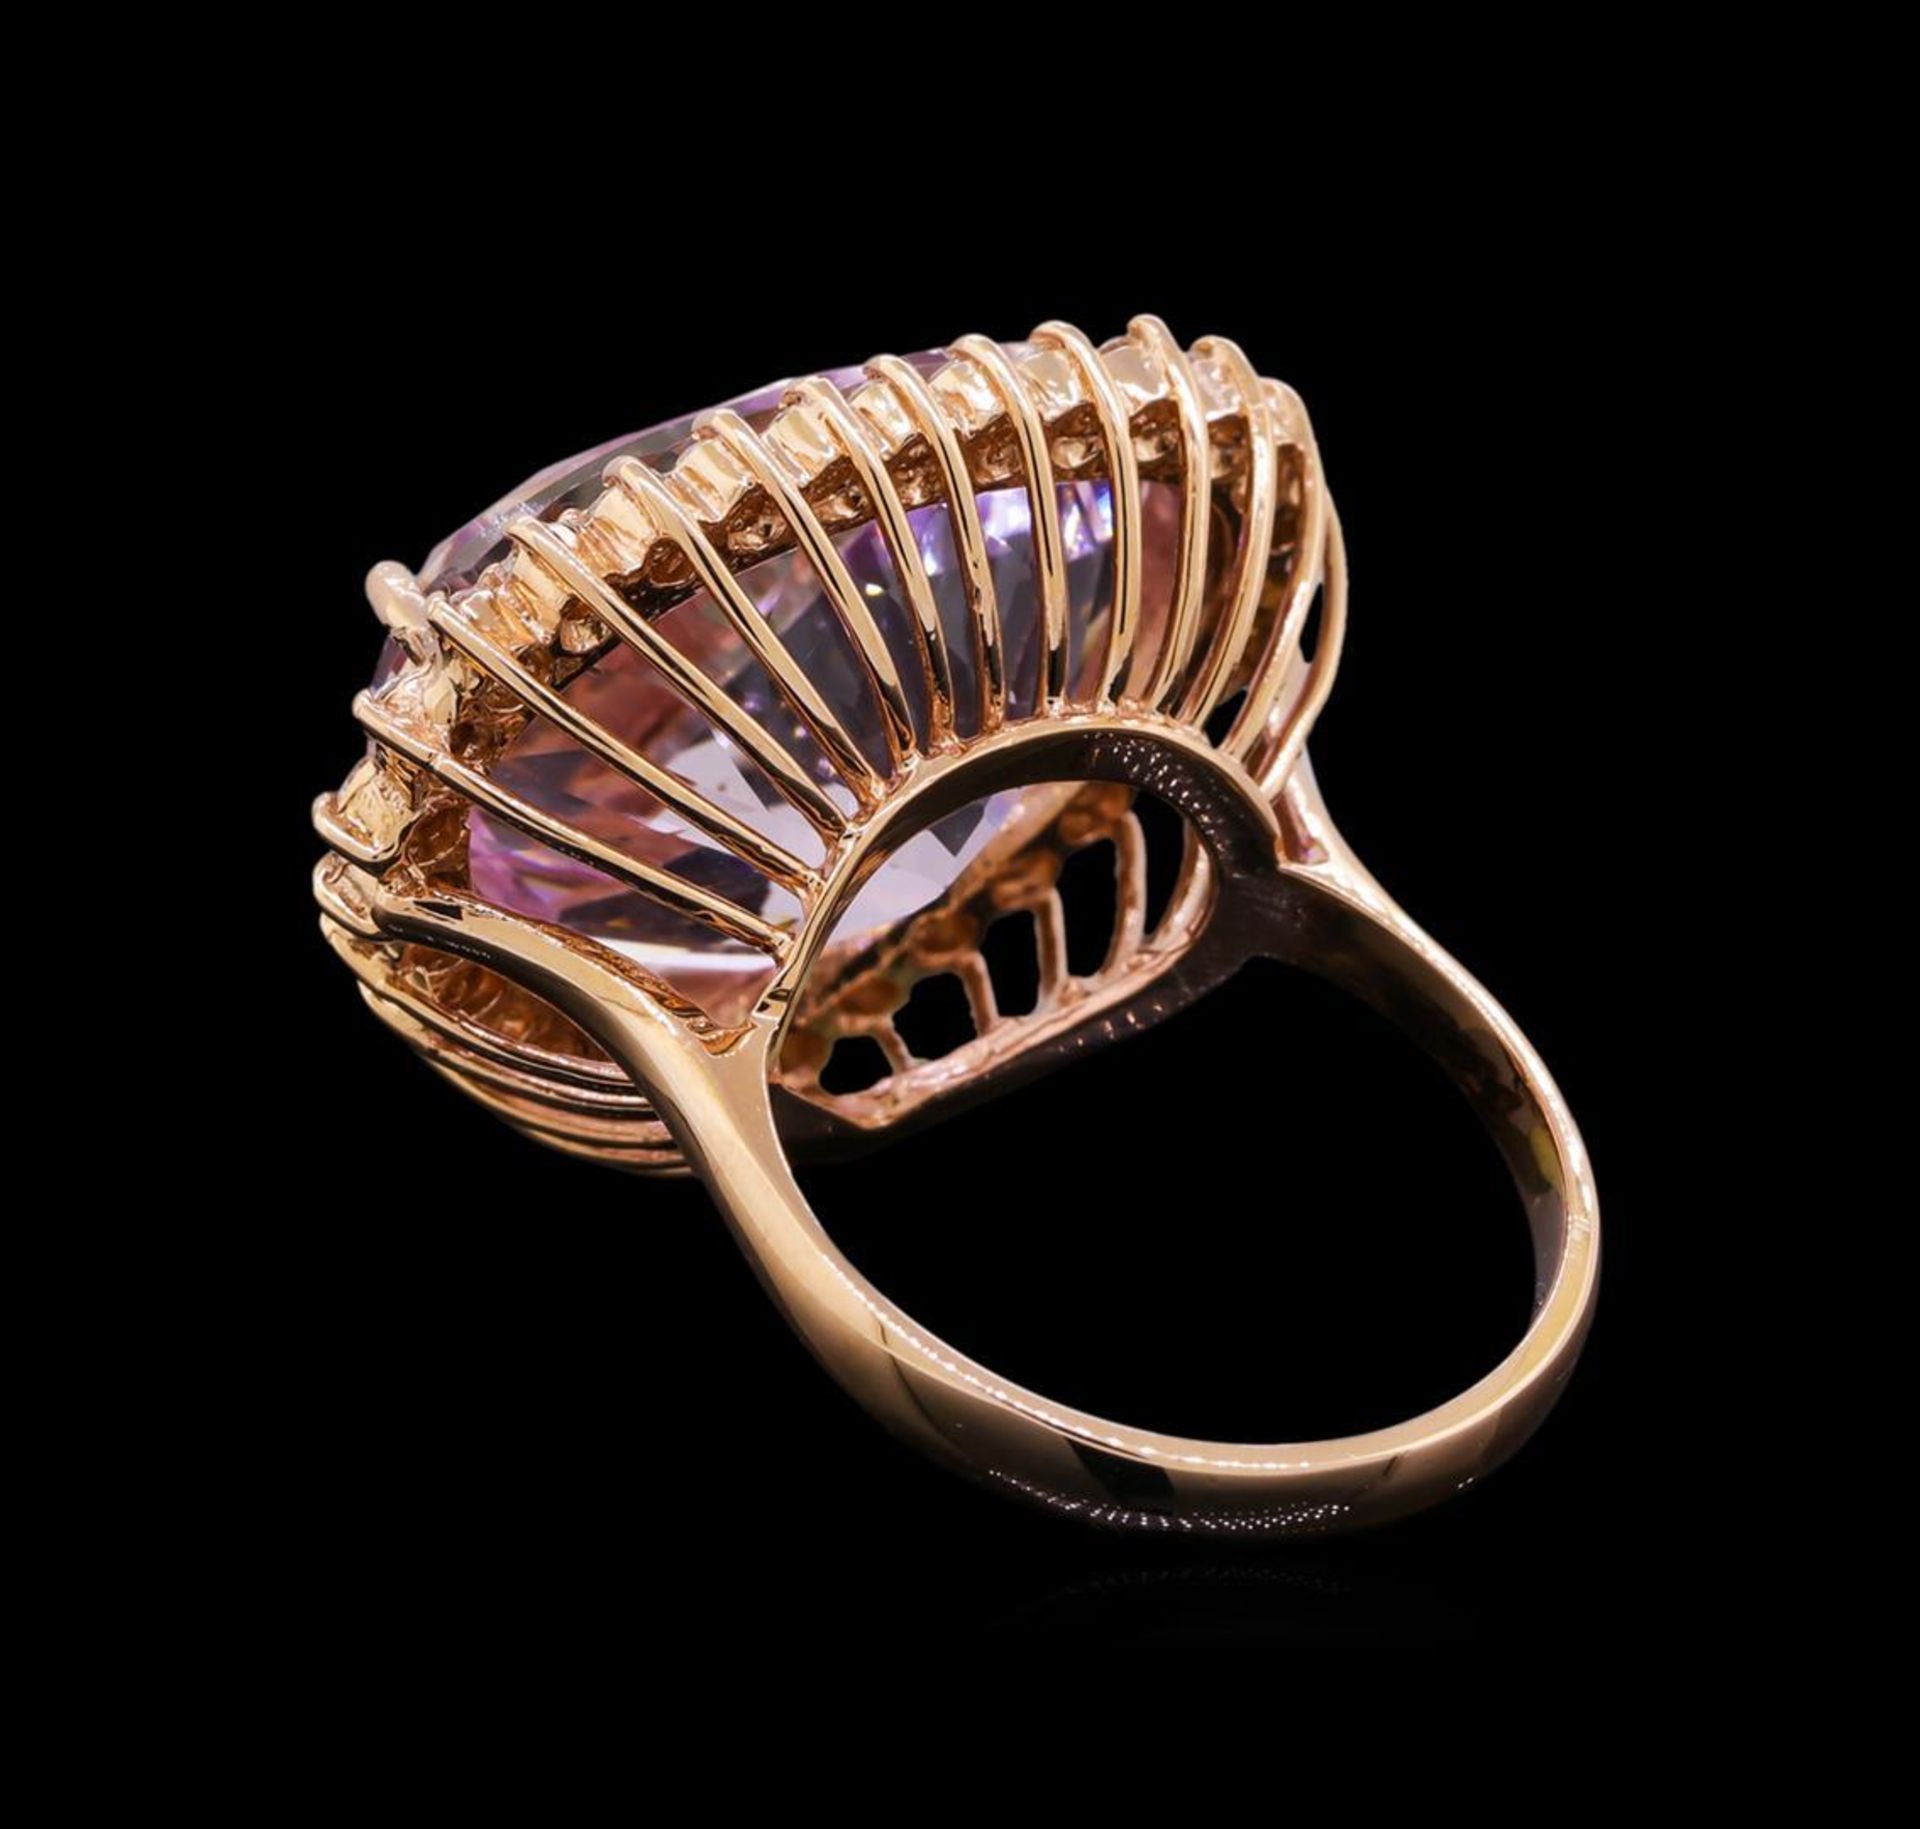 24.70 ctw Kunzite and Diamond Ring - 14KT Rose Gold - Image 3 of 5